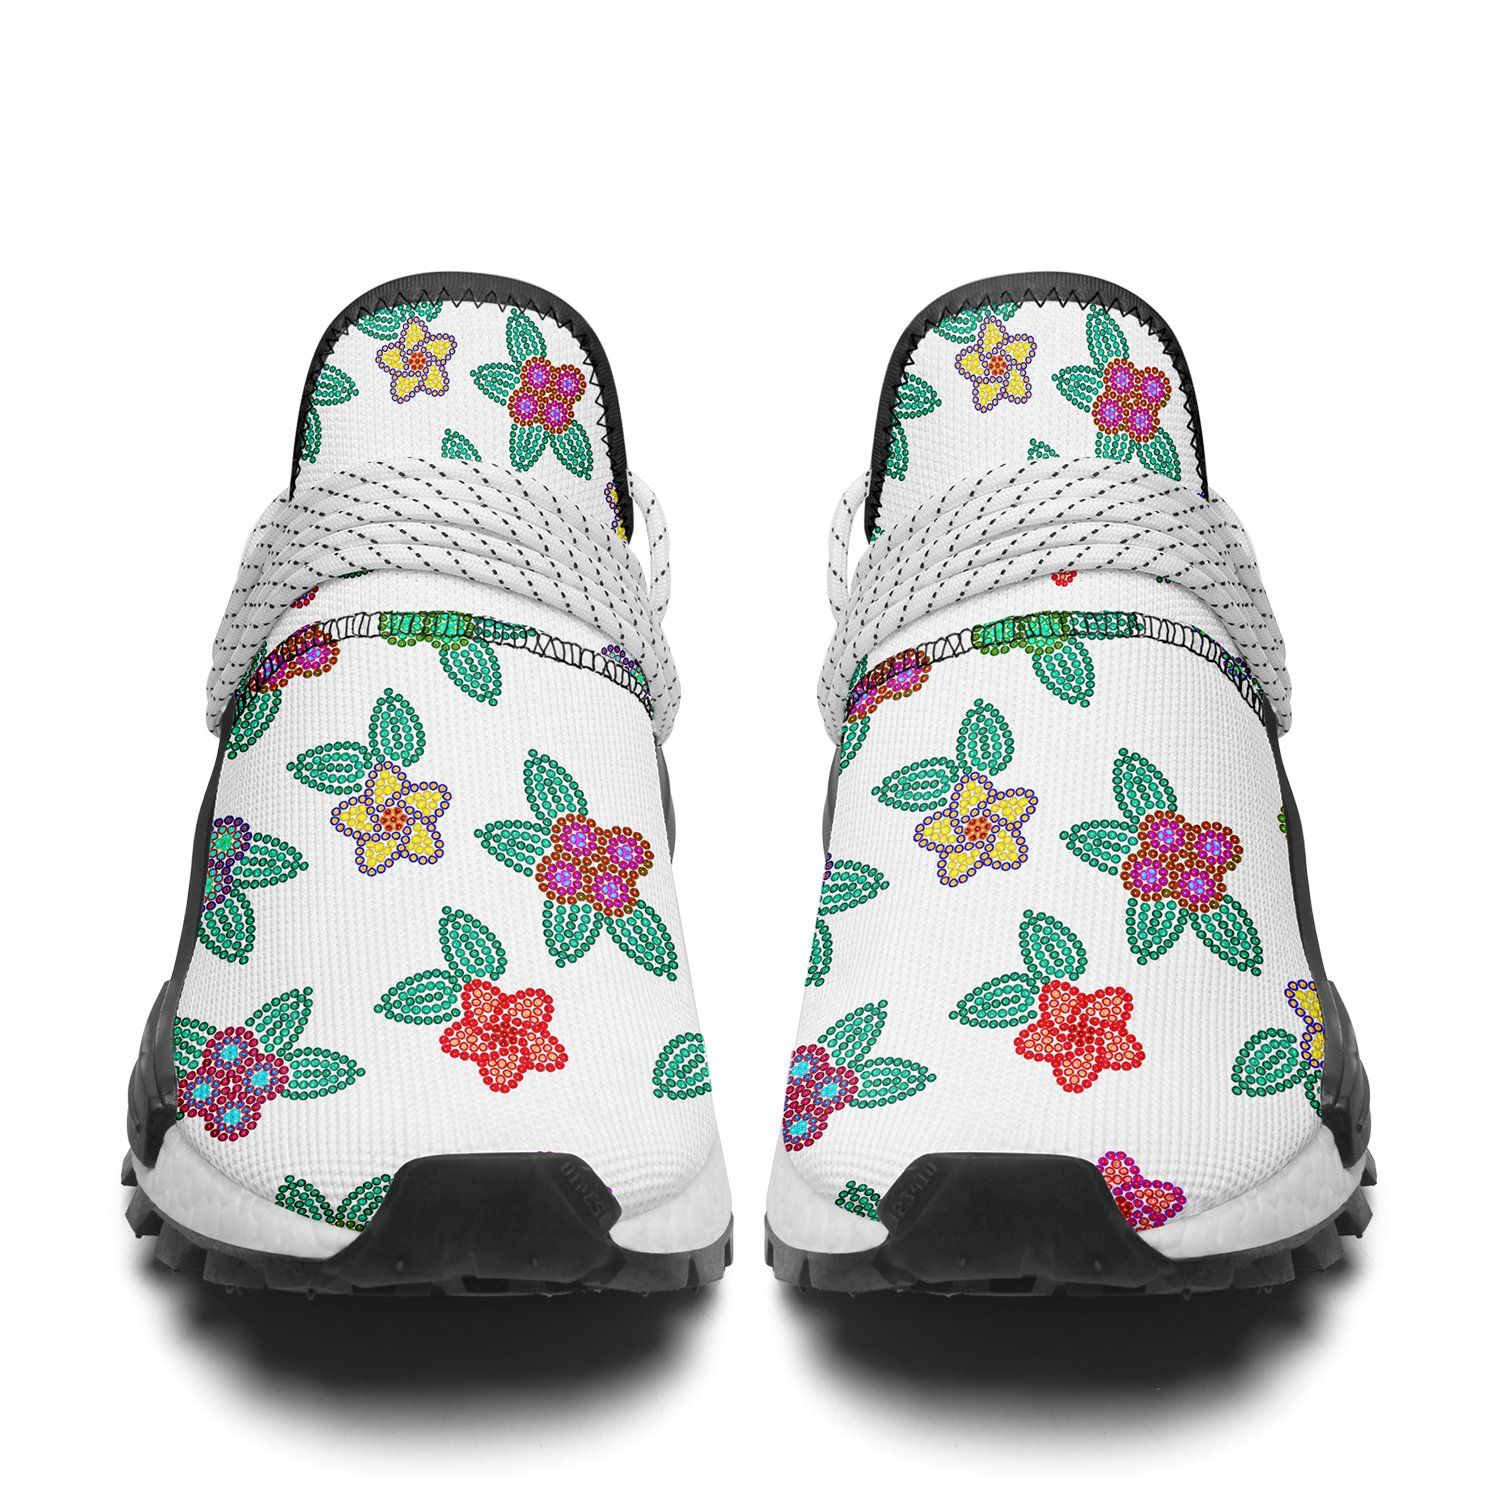 Berry Flowers White Okaki Sneakers Shoes Herman 